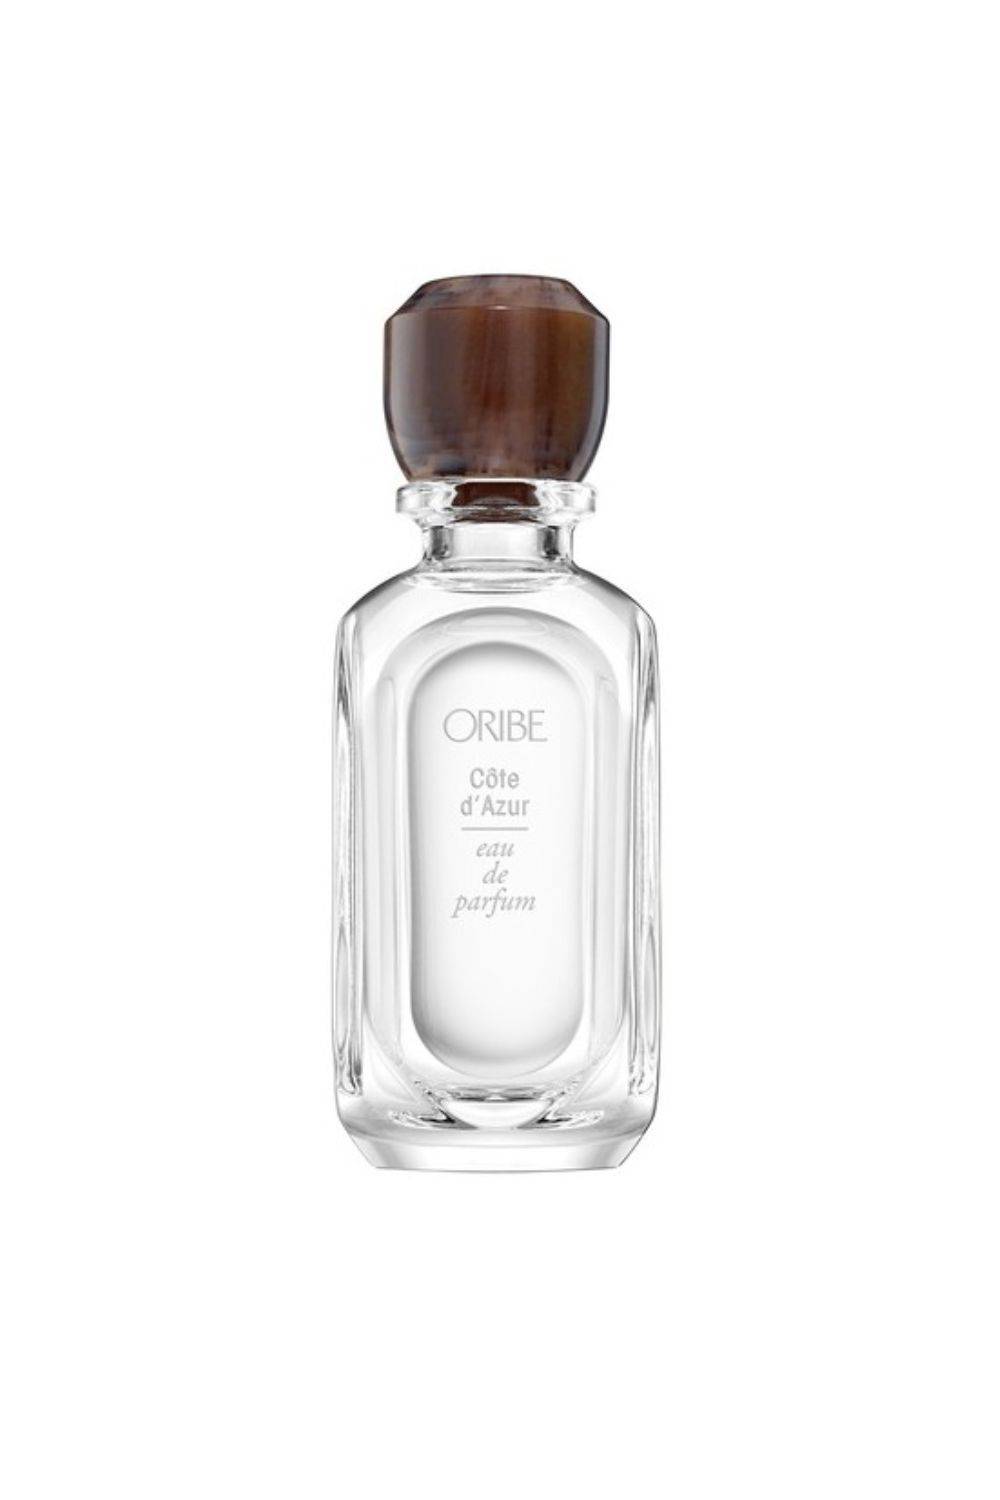 Los perfumes favoritos de Meghan Markle: Cote d'Azur de Oribe 